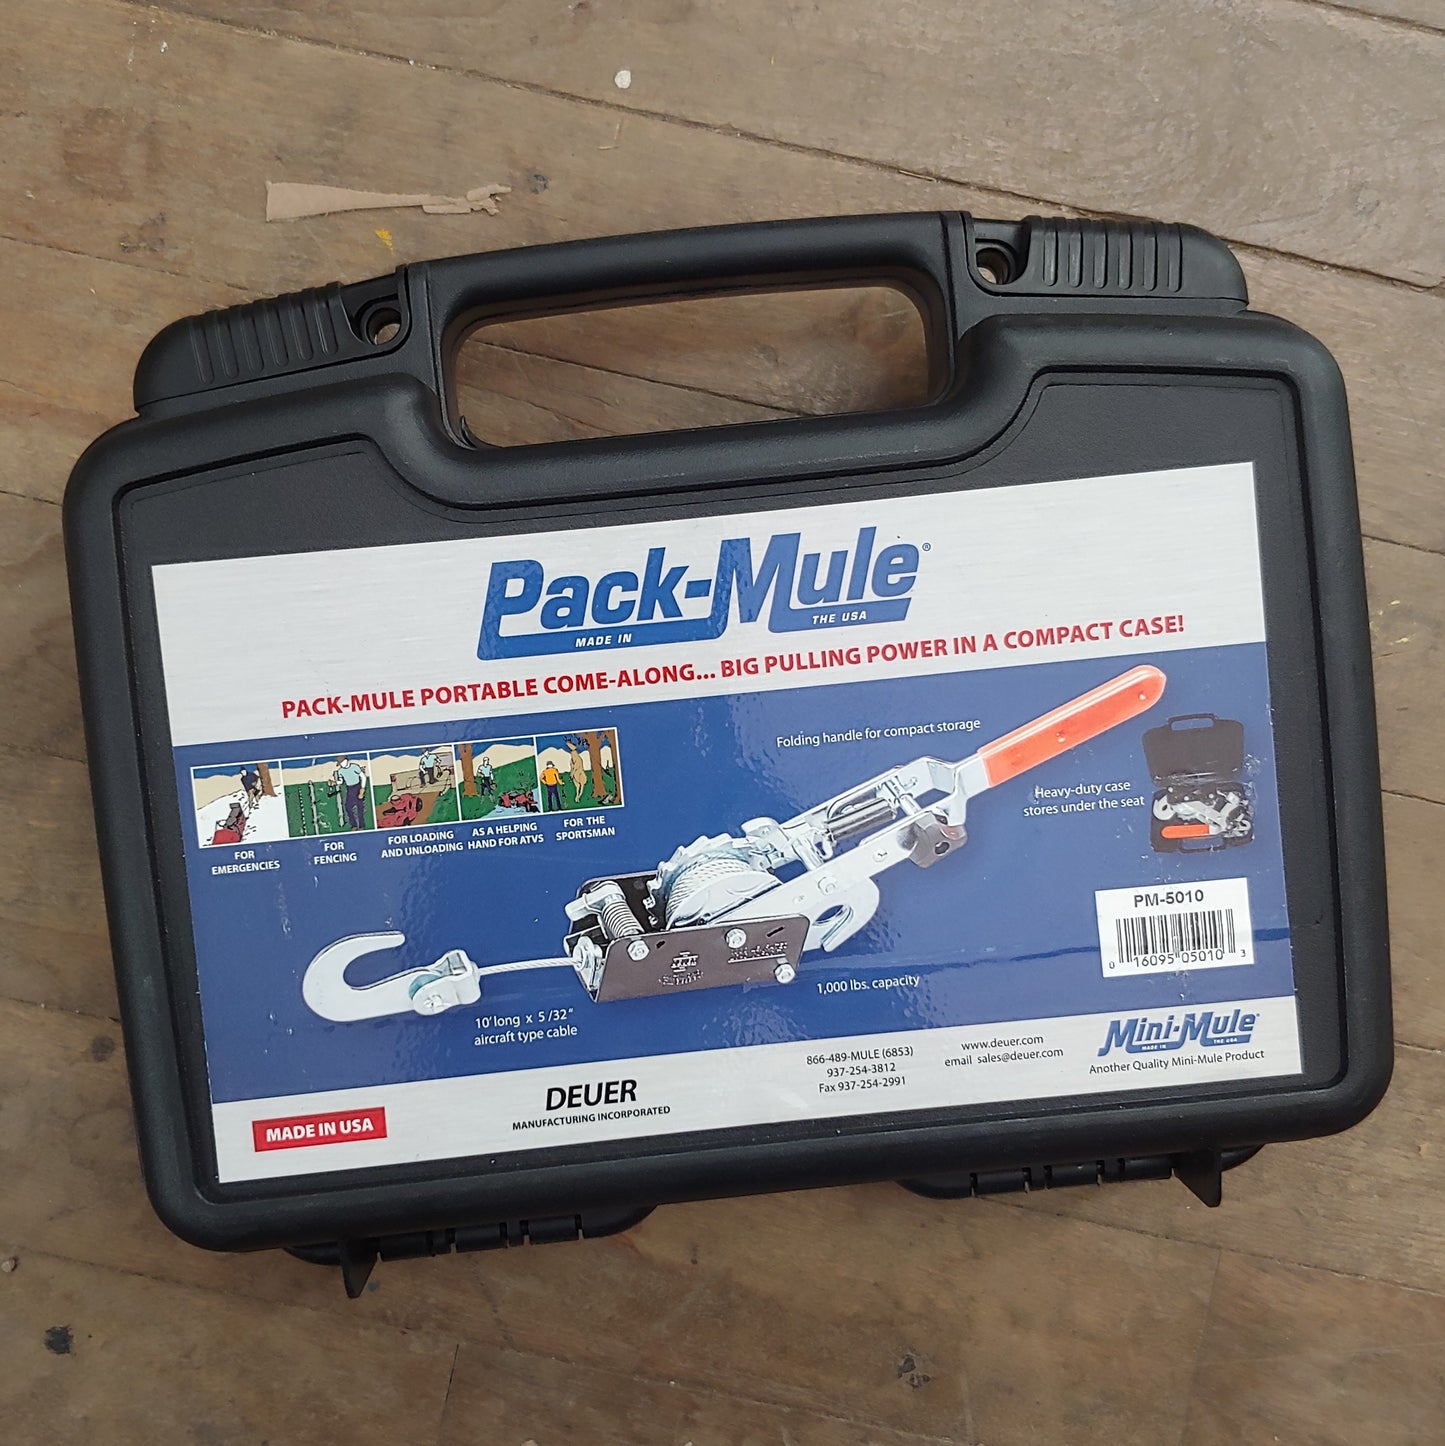 Deuer Pack-Mule 1000 lb capacity, 10' cable (pm-5010)